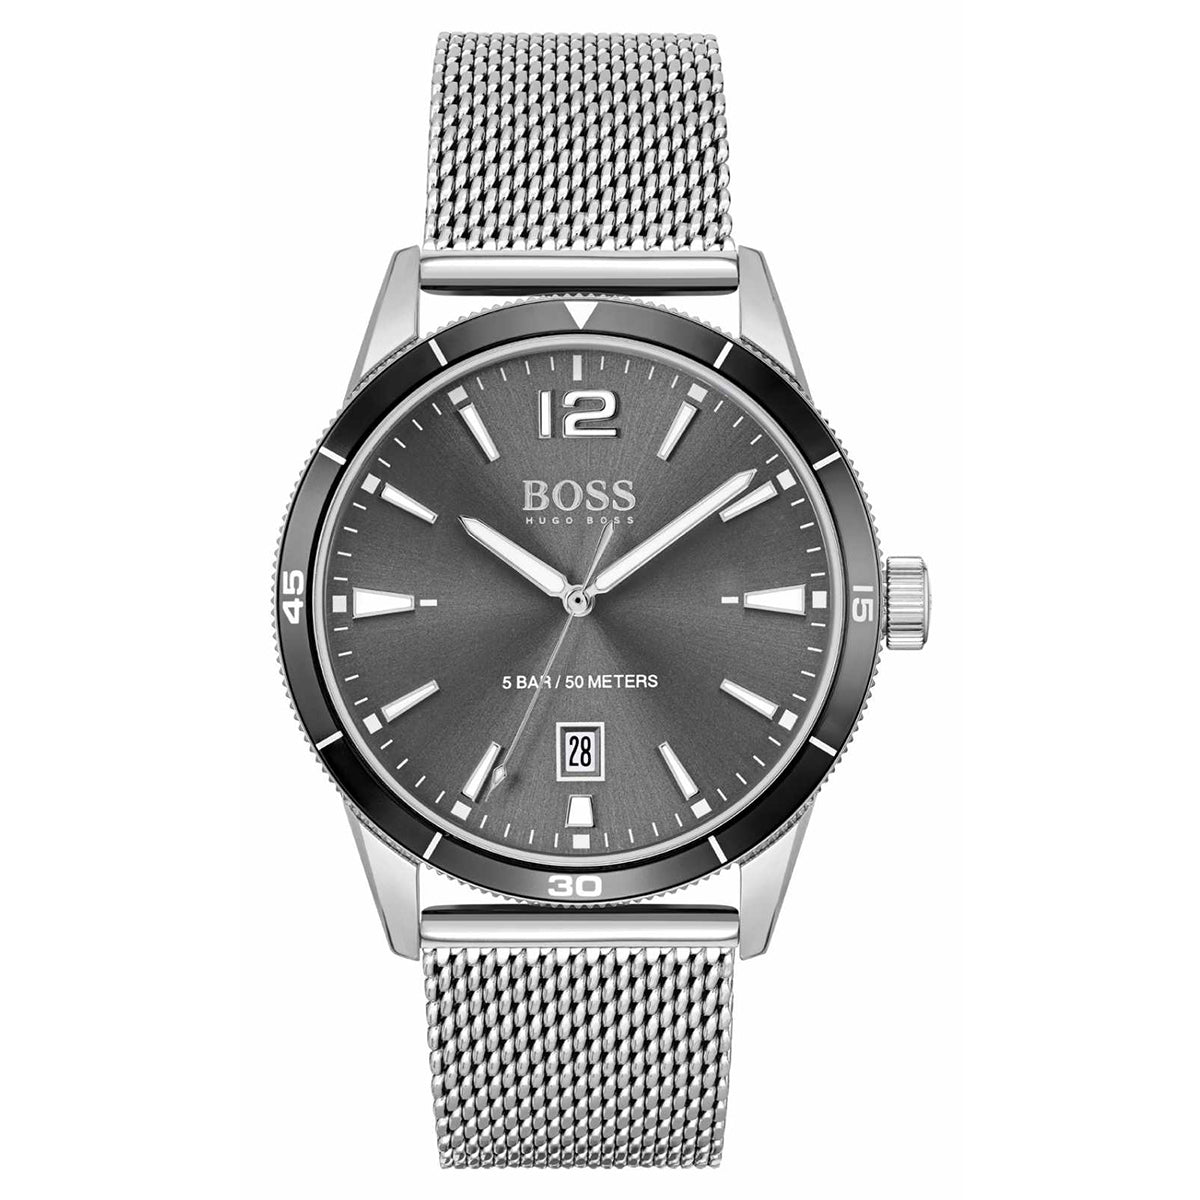 Hugo Boss - Watch and Cufflinks Gift Set - HB157.0126